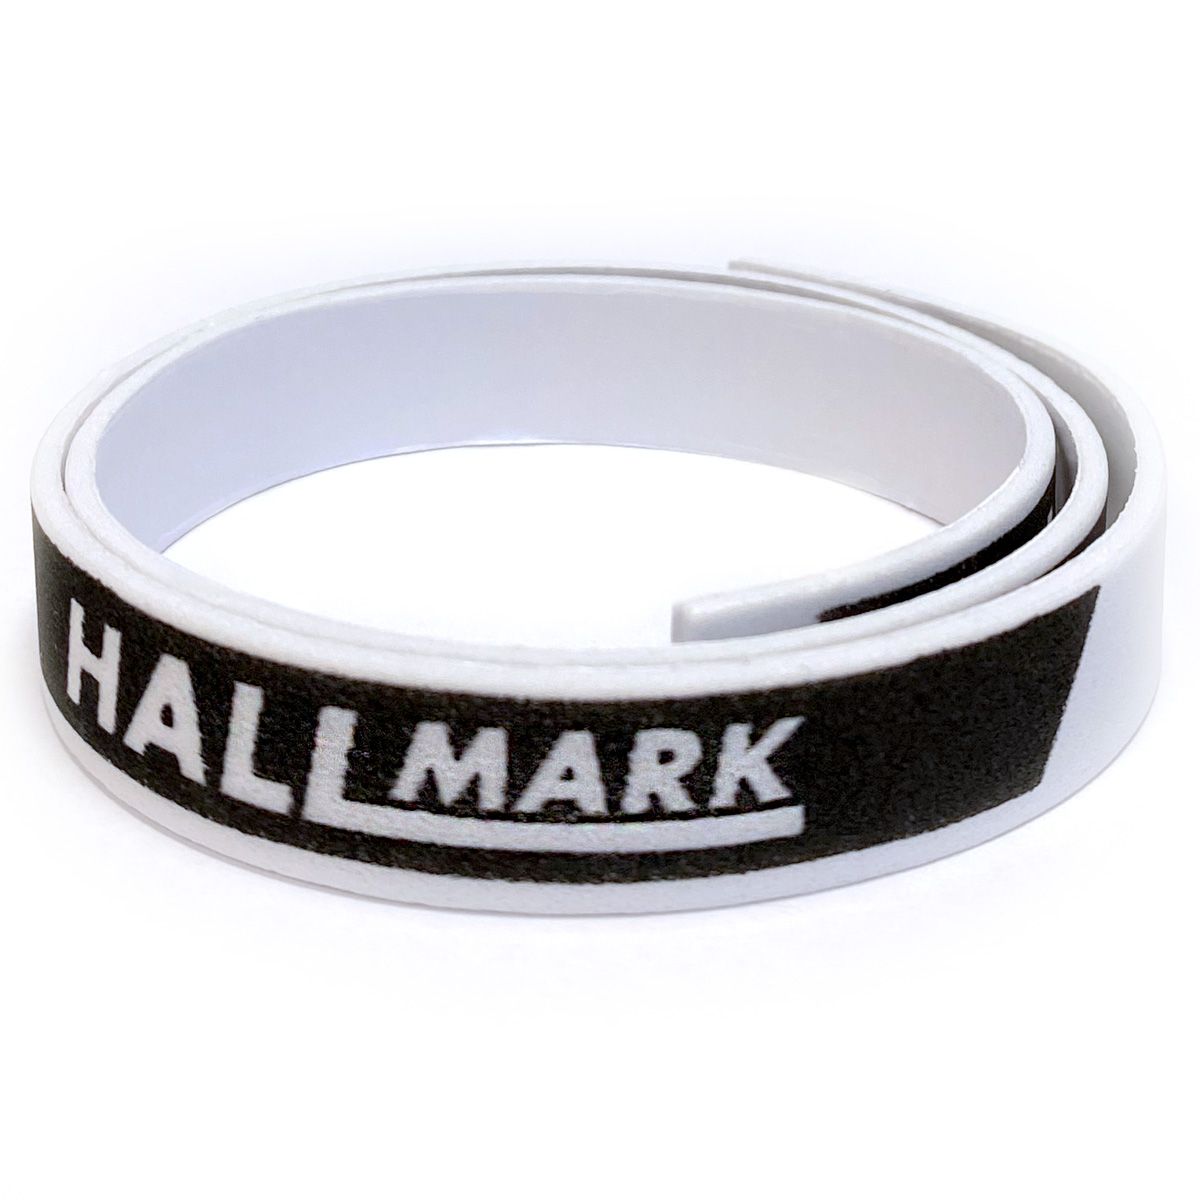 HALLMARK assembly edge tape